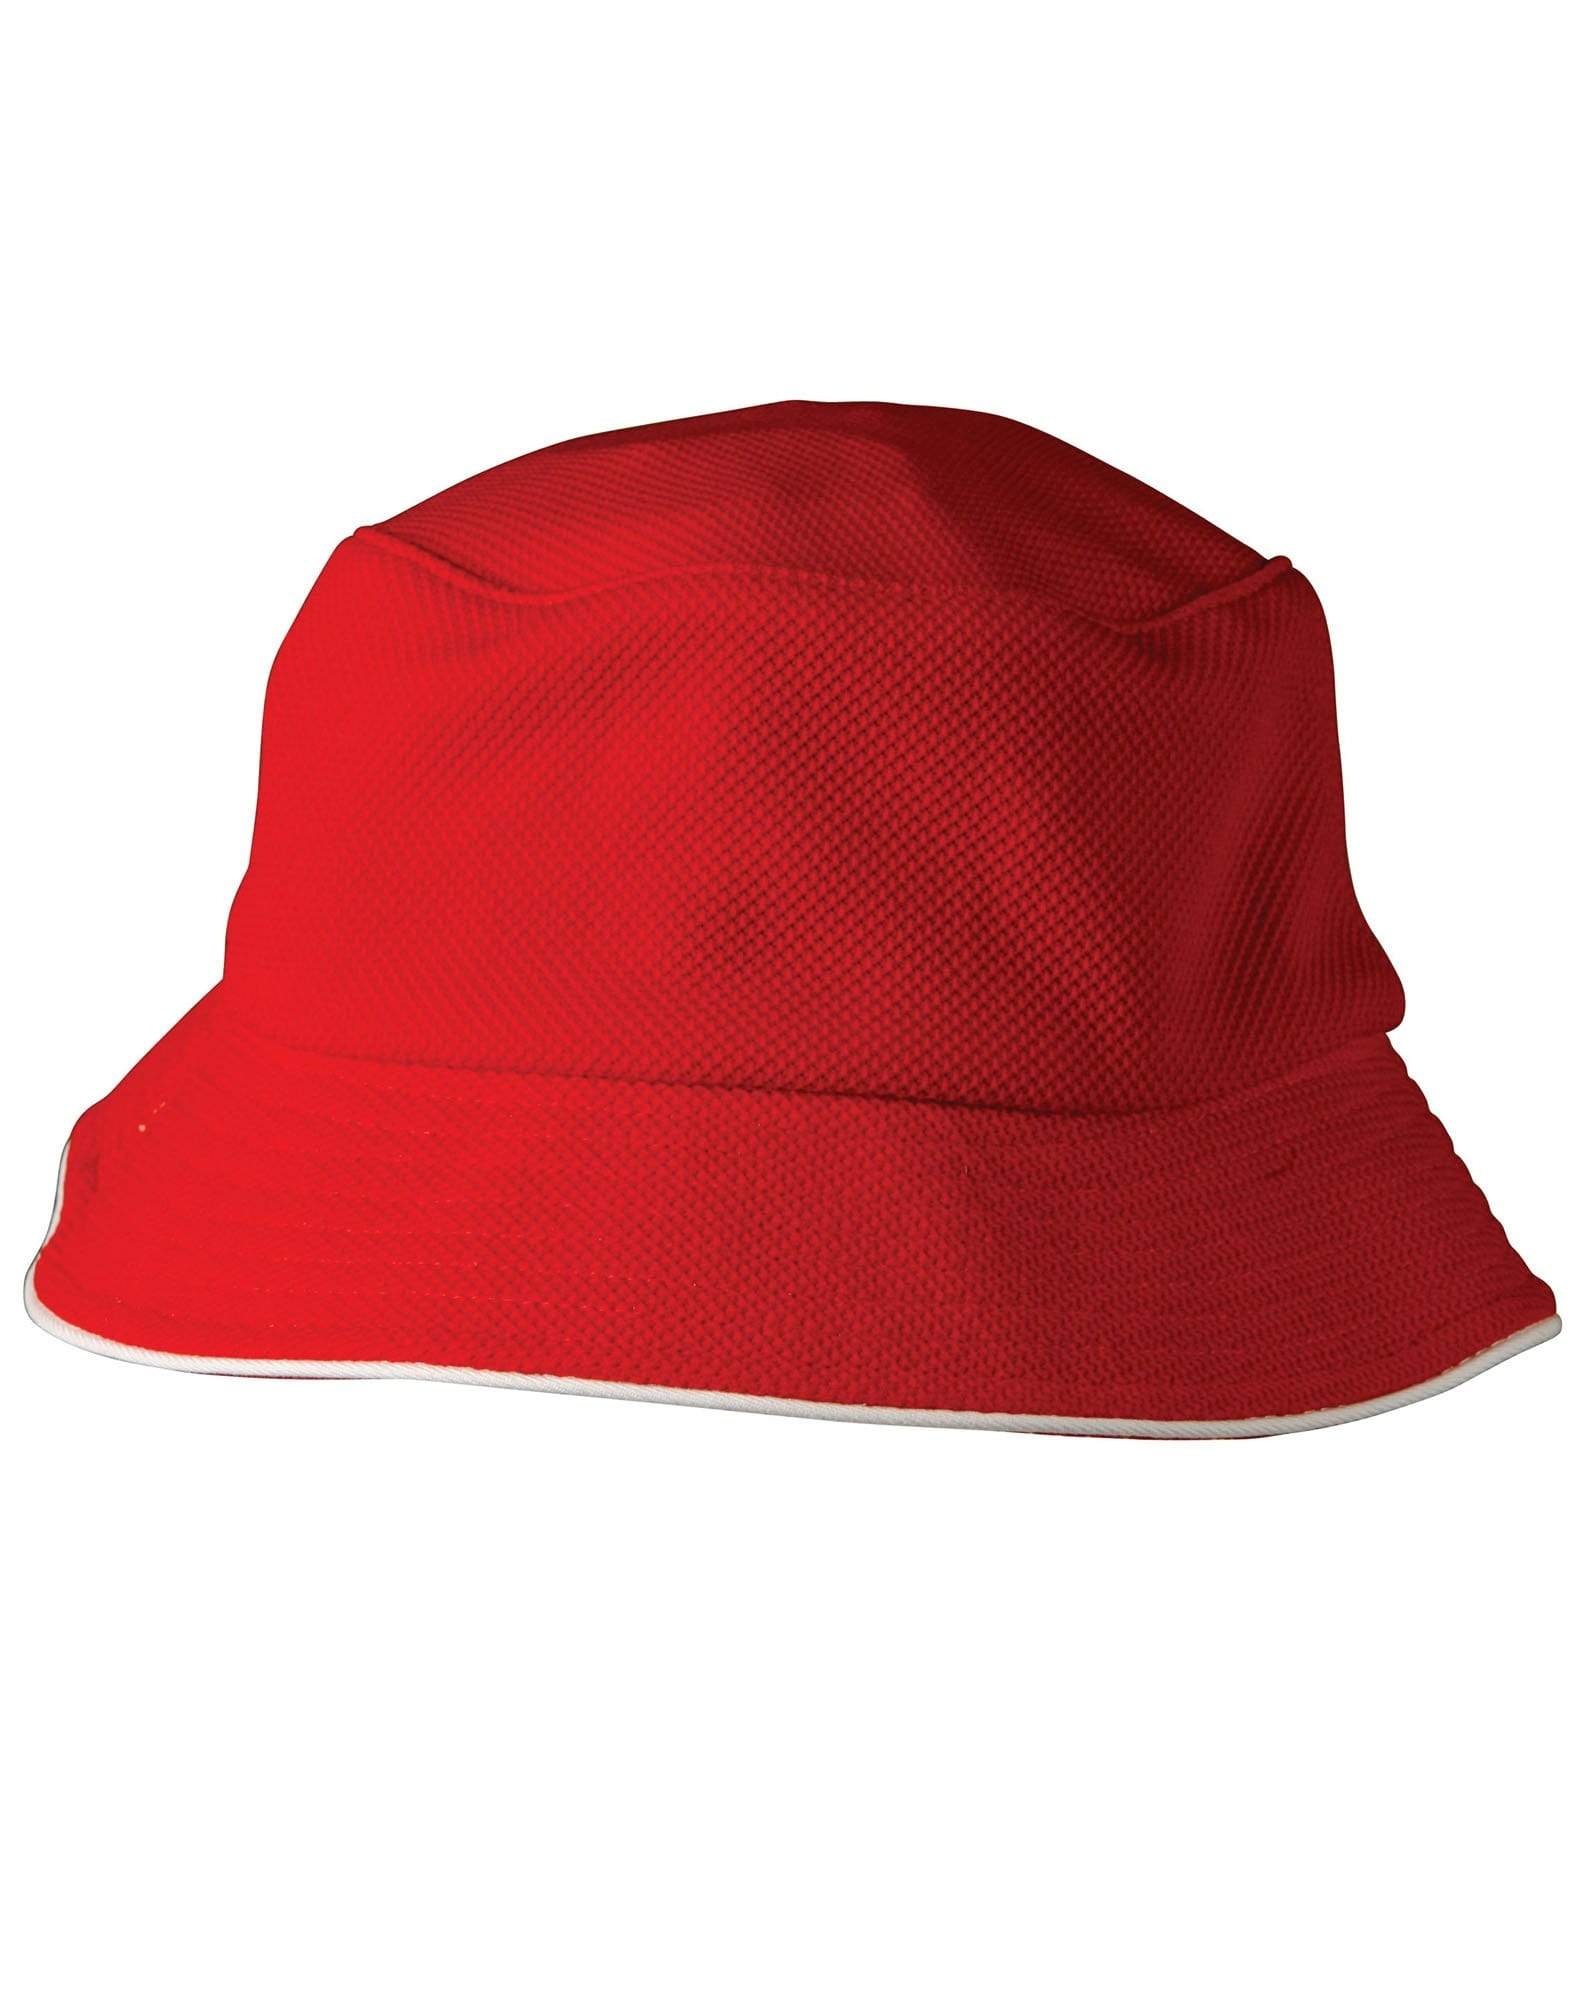 Pique Mesh With Sandwich Bucket Hat CH71 Active Wear Australian Industrial Wear Red/White One size 